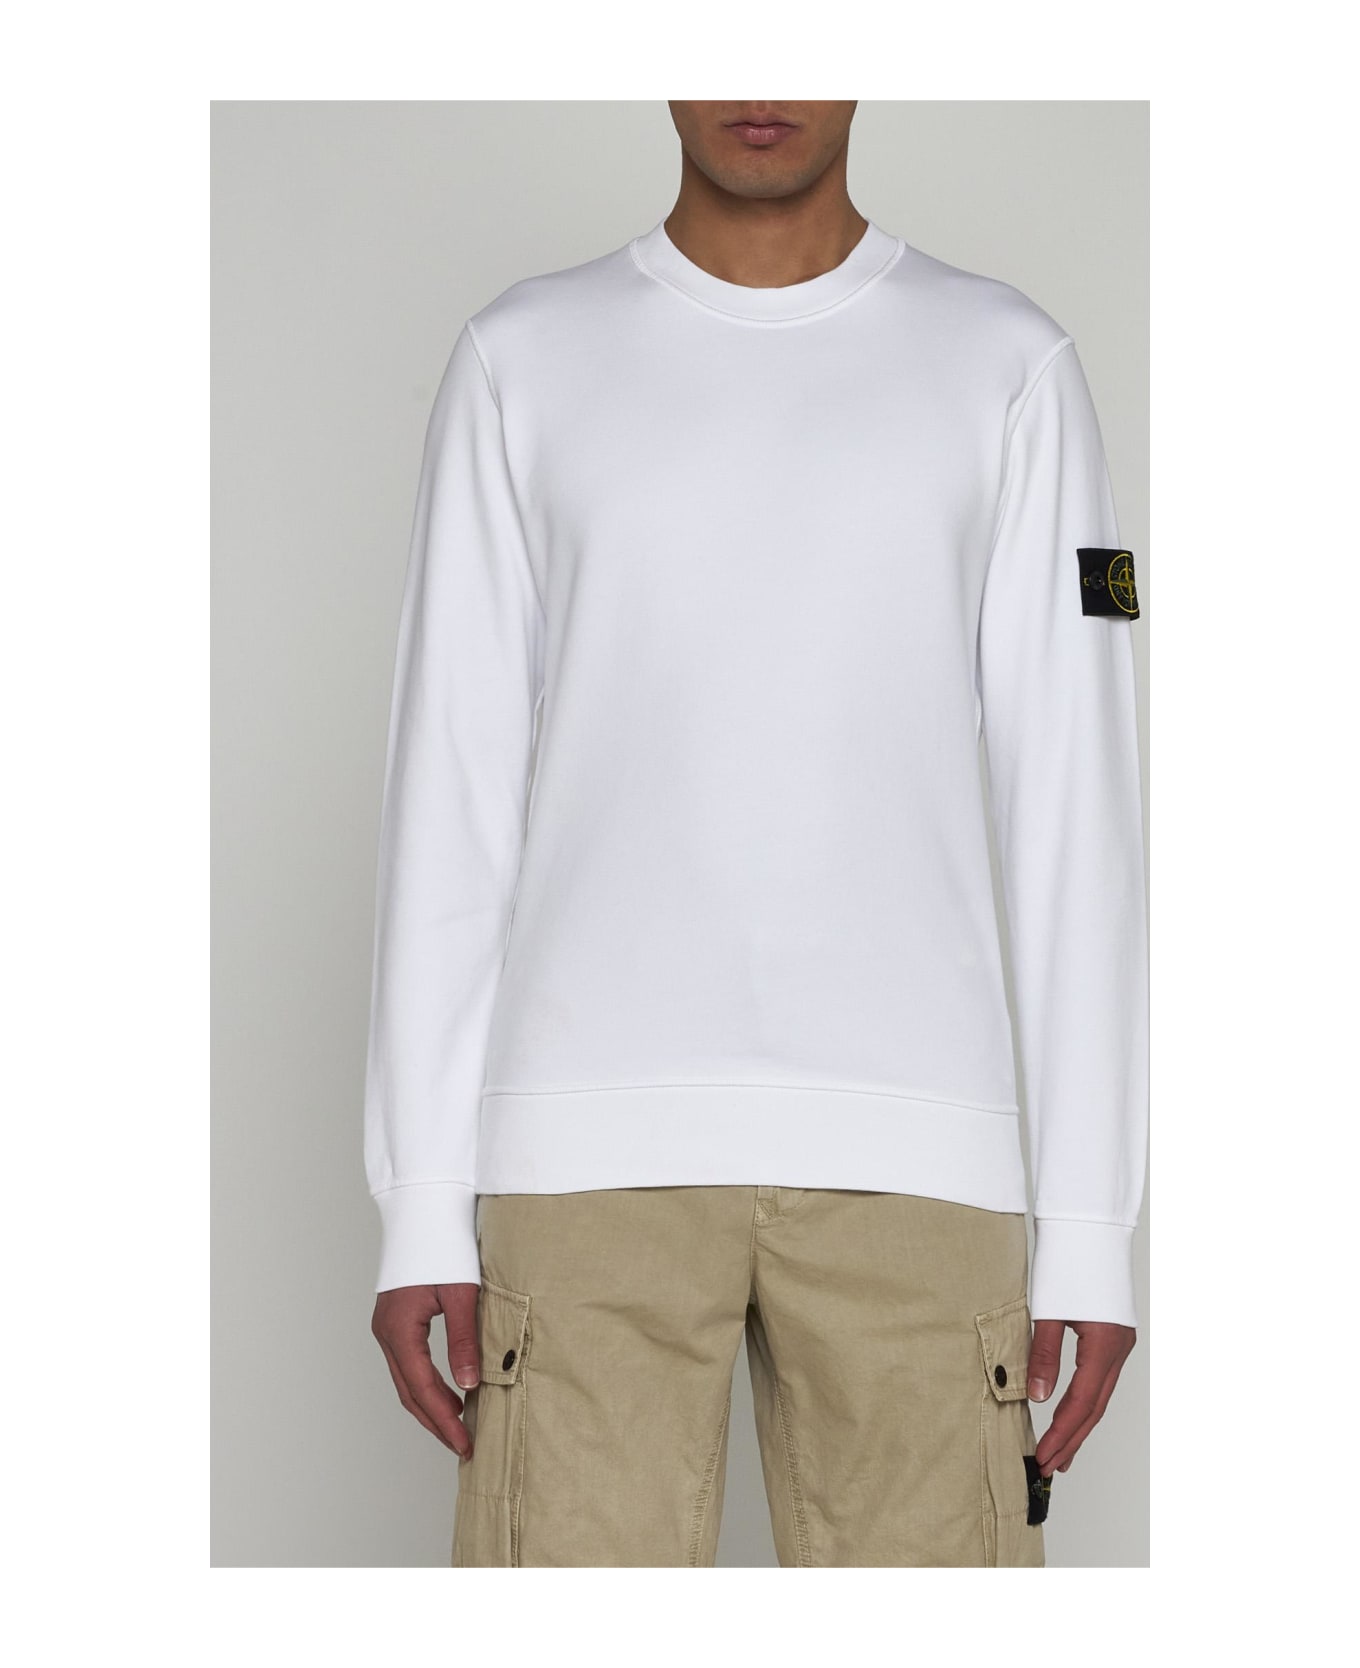 Stone Island Cotton Sweater - WHITE